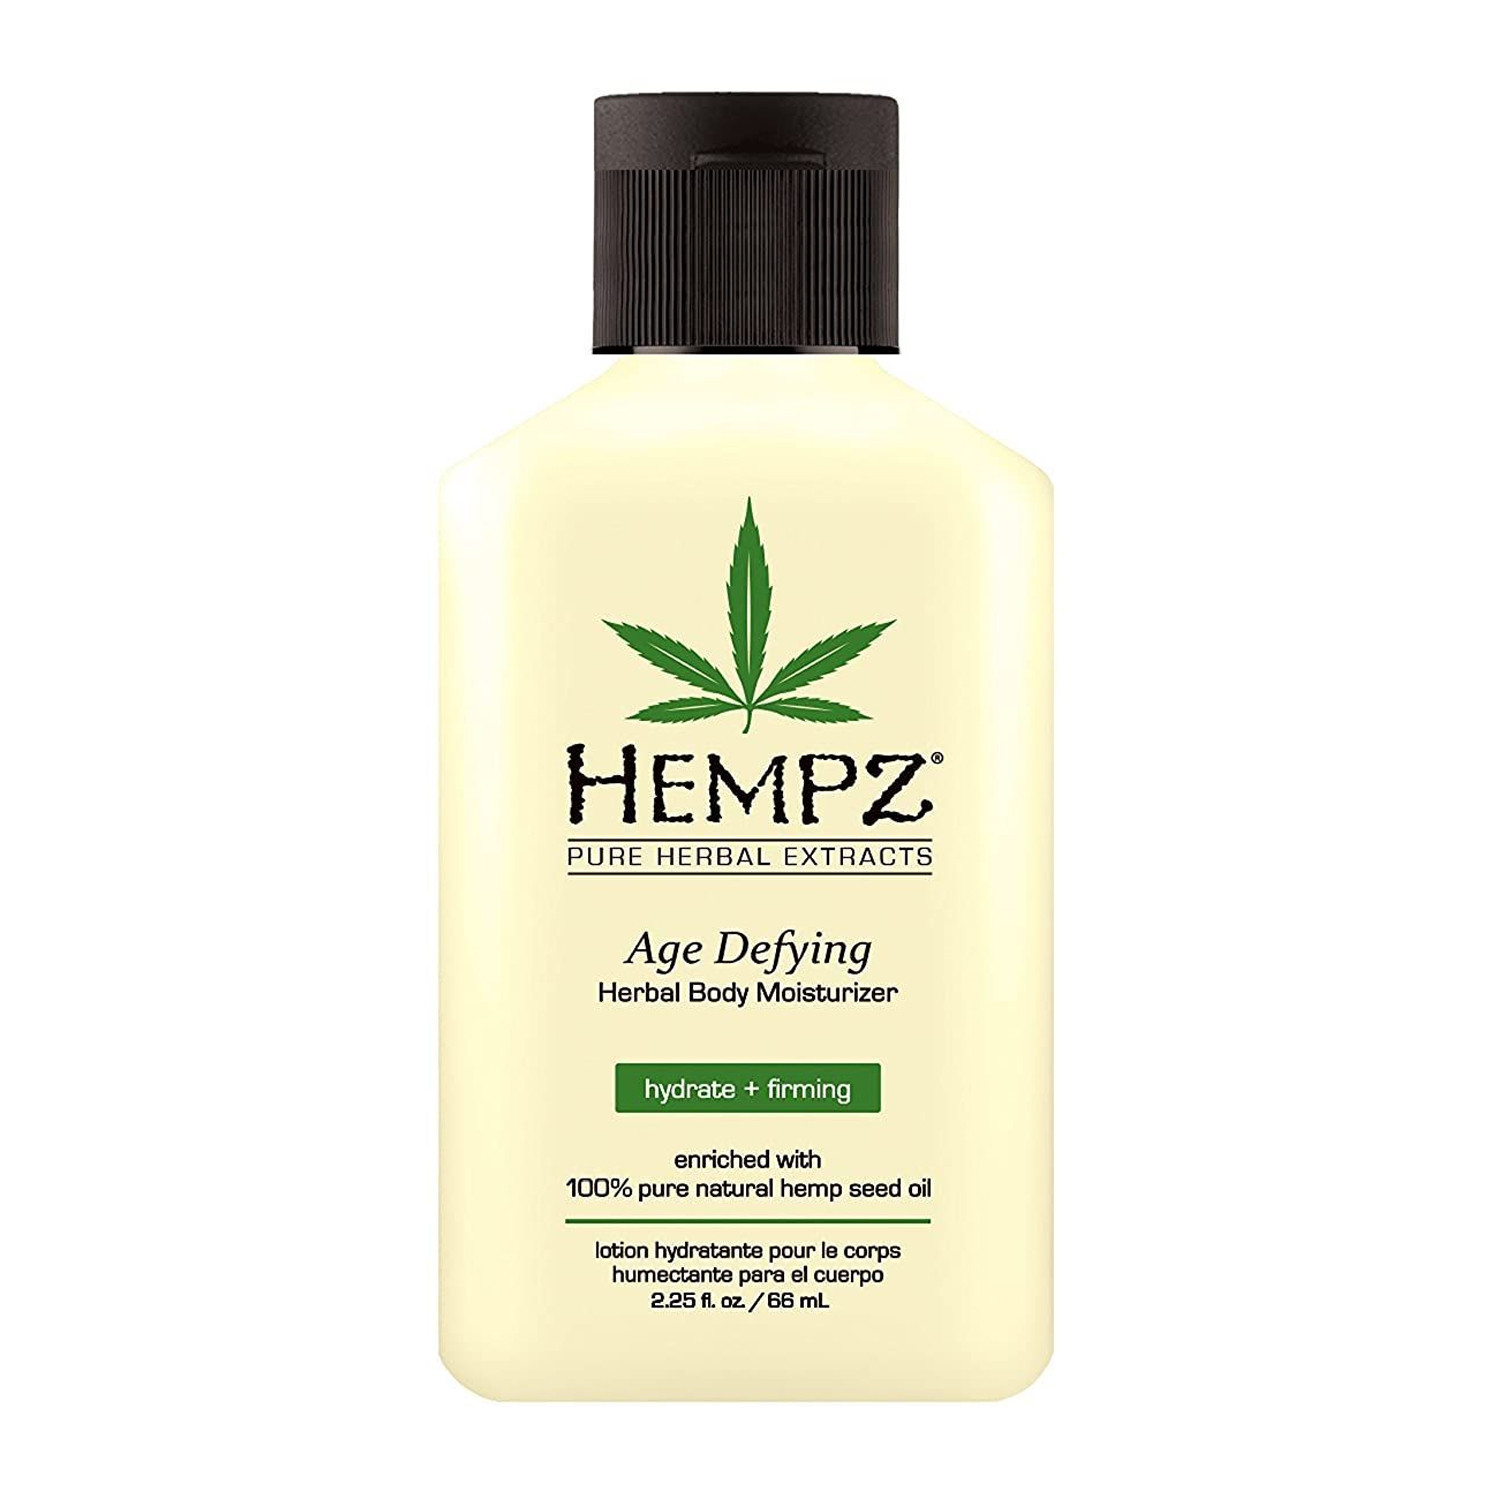 Відгуки про Hempz Age Defying Herbal Body Moisturizer - Антивозрастное увлажняющее растительное молочко для тела